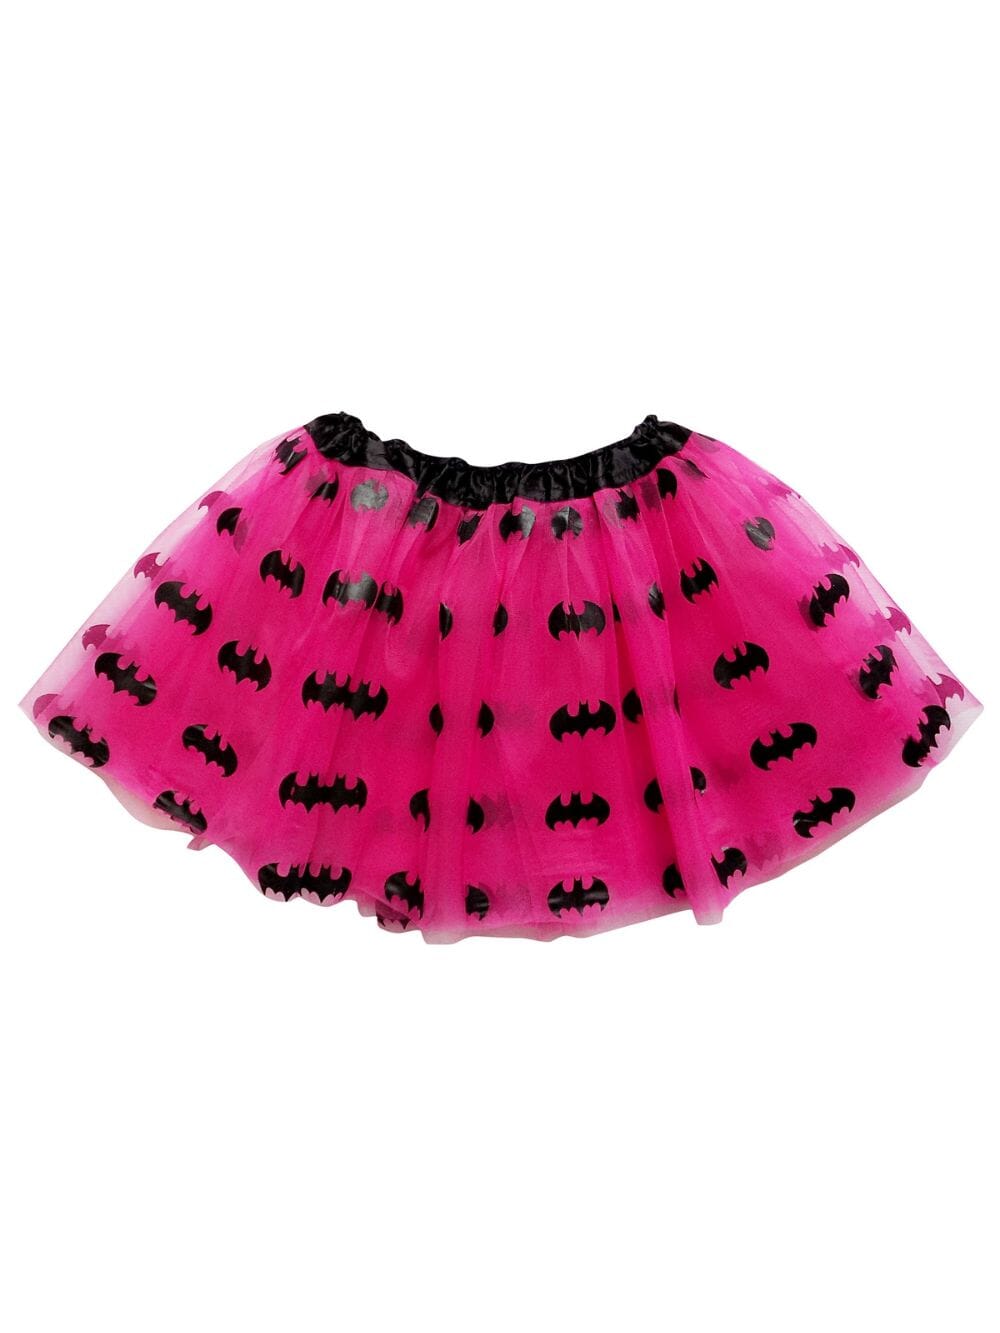 Hot Pink & Black Bats Superhero Tutu Costume Skirt for Kids, Adult, Plus - Sydney So Sweet